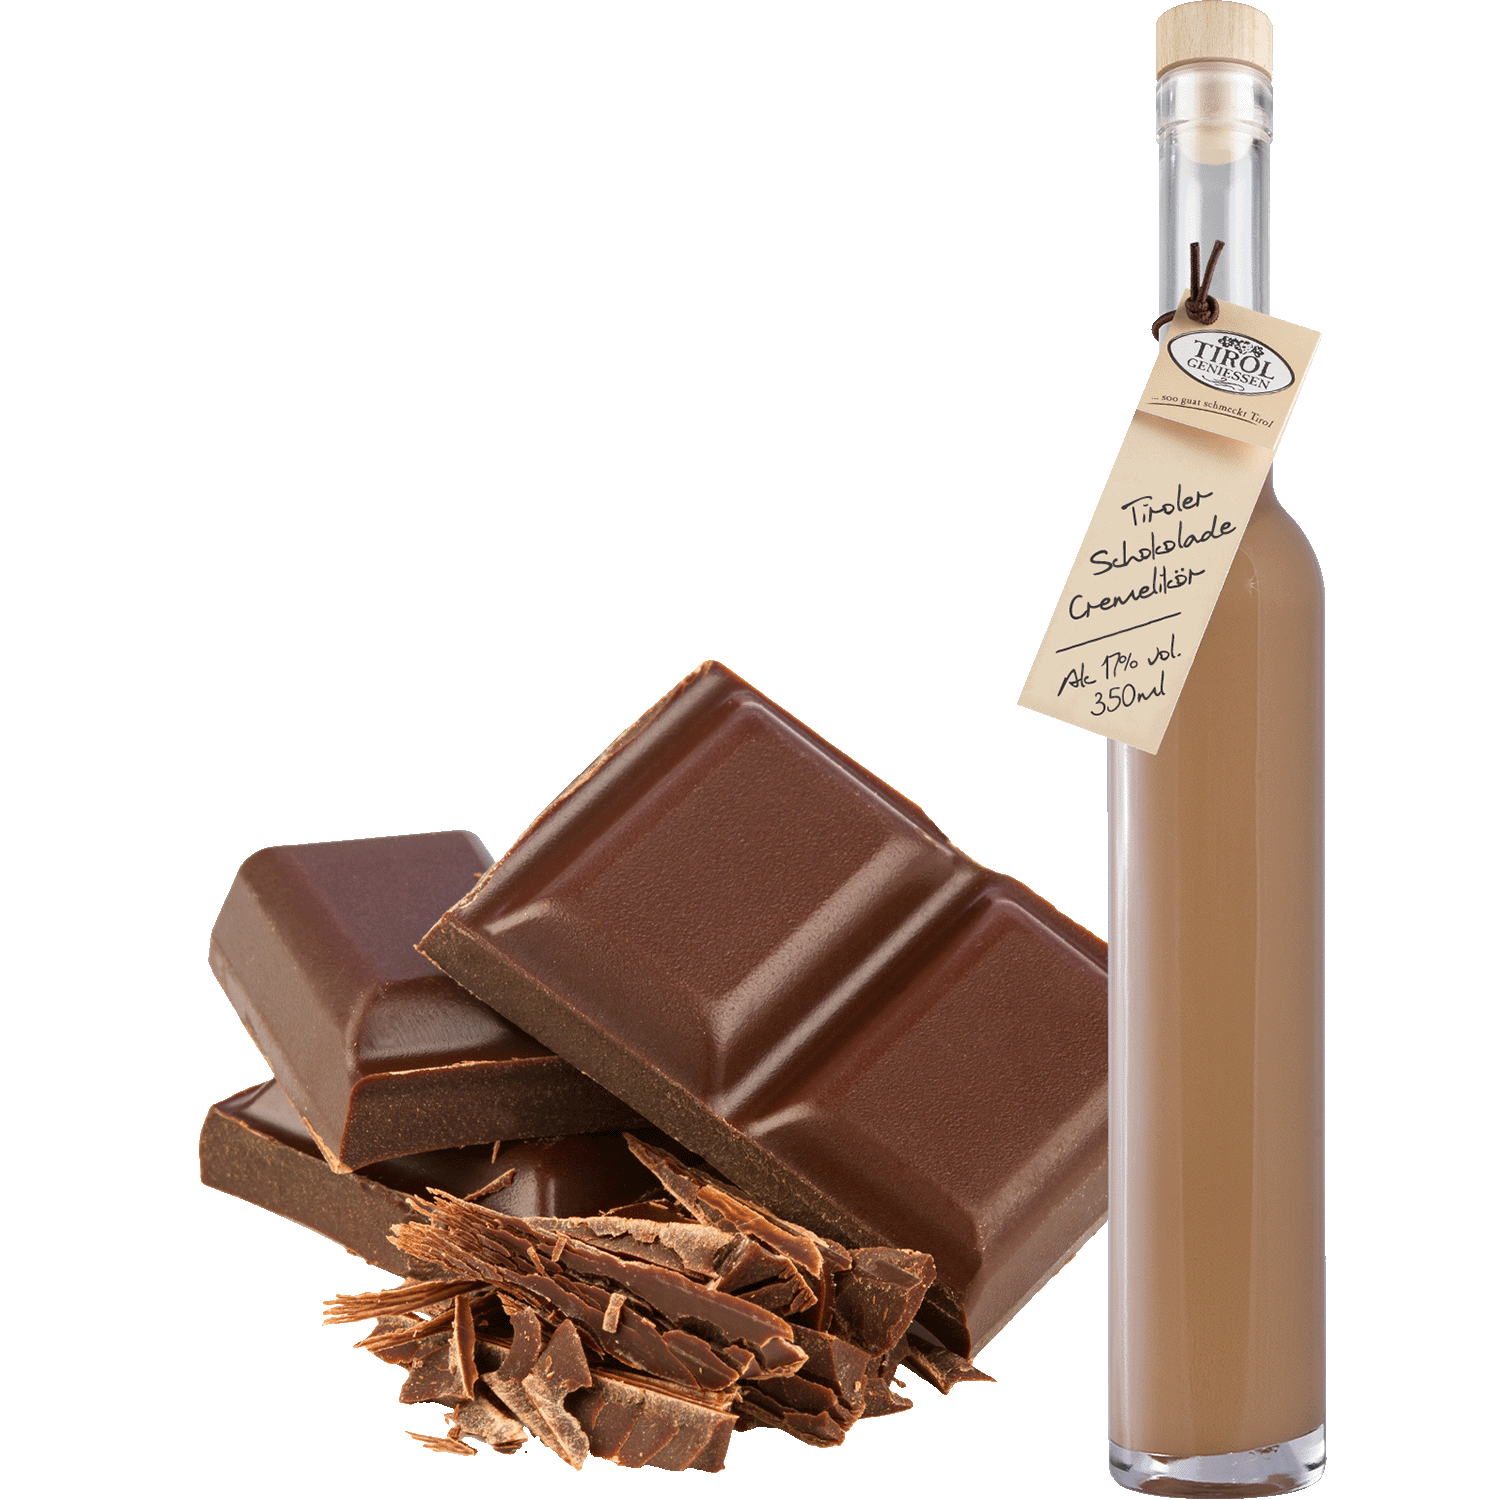 Chocolate Cream Liqueur in gift bottle from Austria from Tirol Geniessen